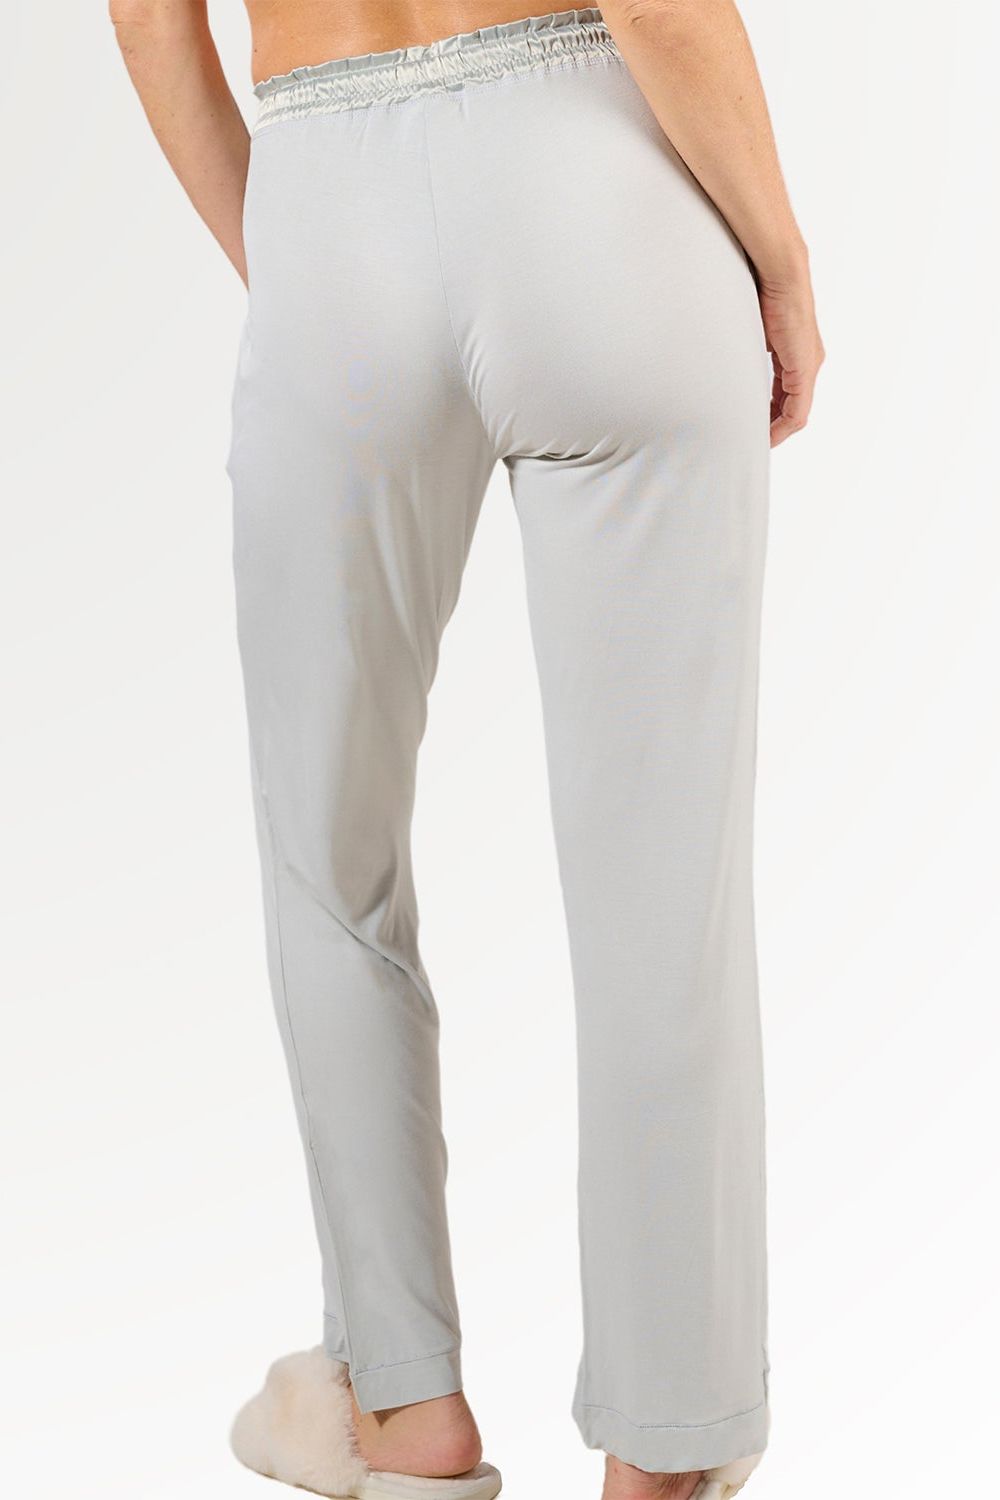 Calvin Klein Underwear SLEEP PANT - Pyjama bottoms - leaf skeleton/mauve  mist/mauve - Zalando.co.uk